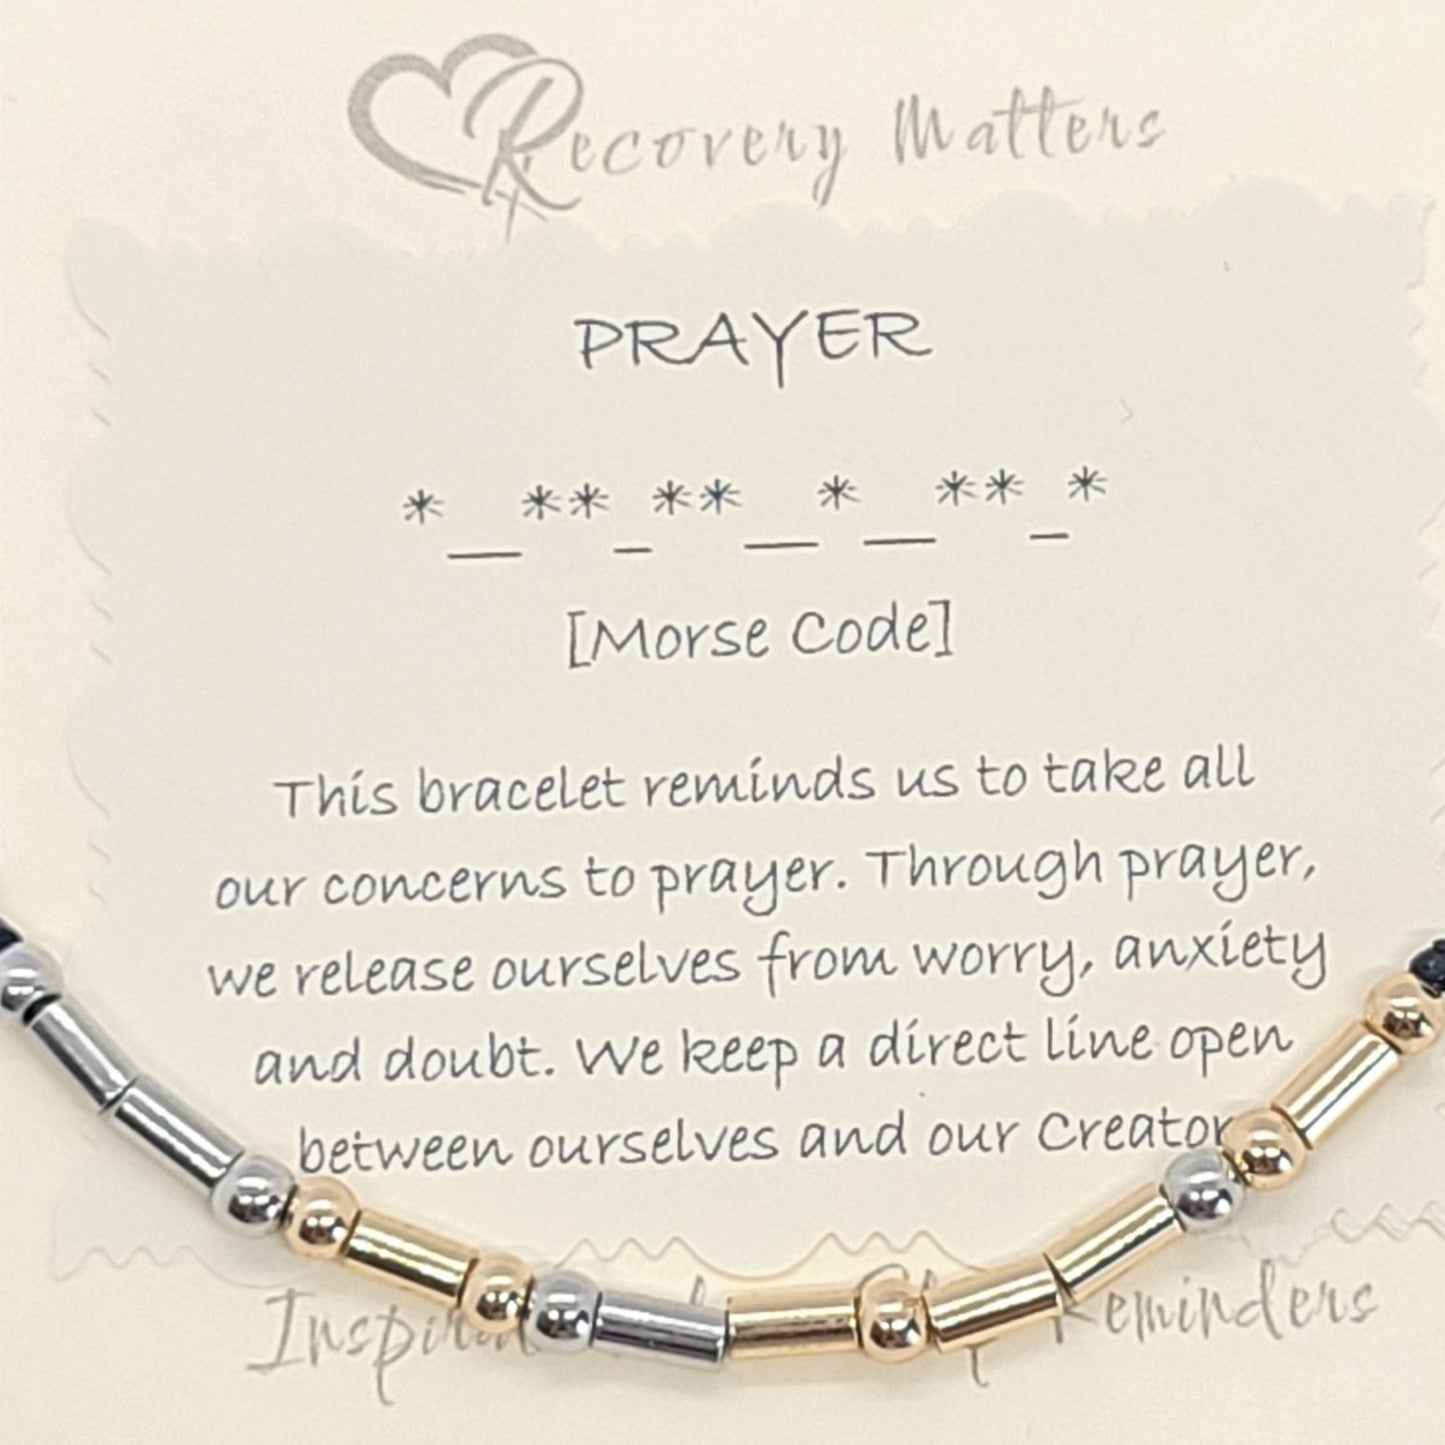 PRAYER Morse Code Bracelet By Recovery Matters